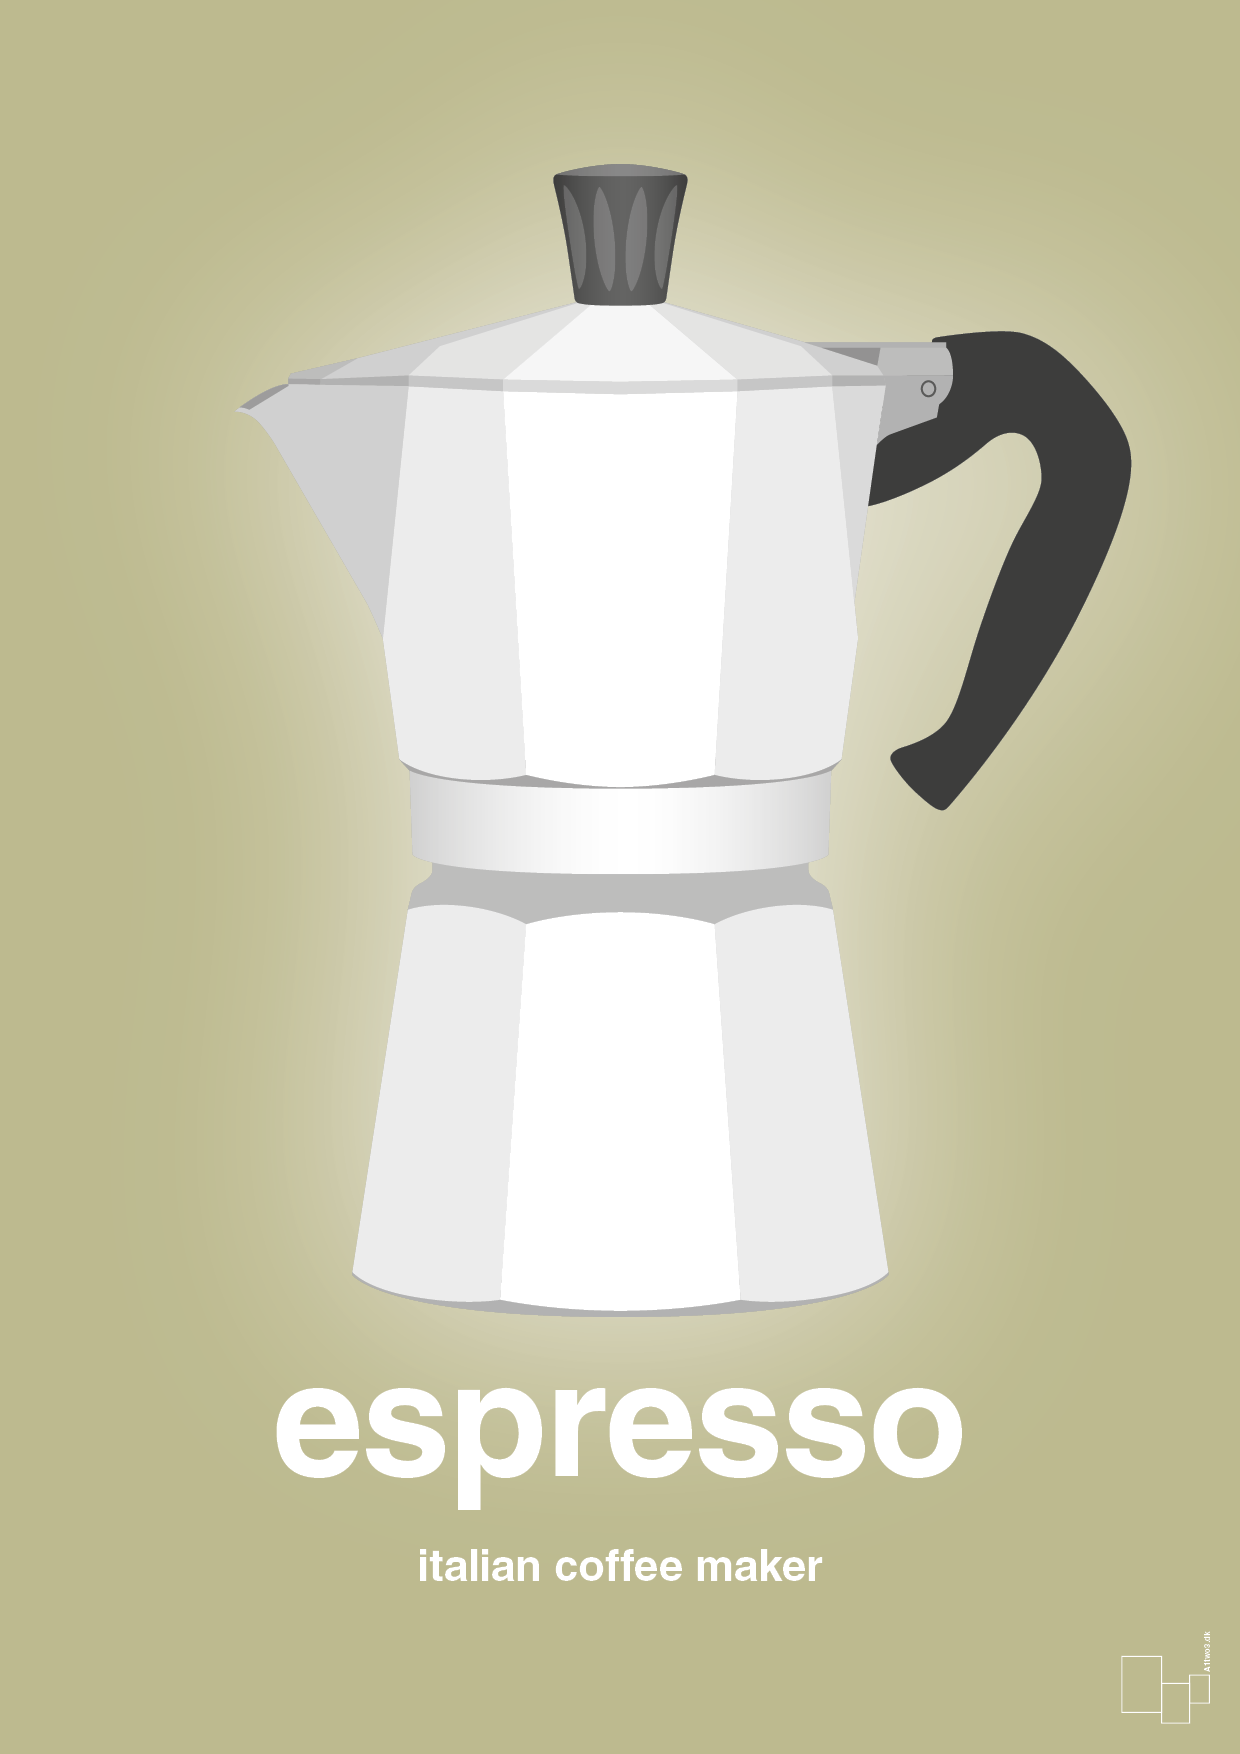 espresso - italian coffee maker - Plakat med Mad & Drikke i Back to Nature